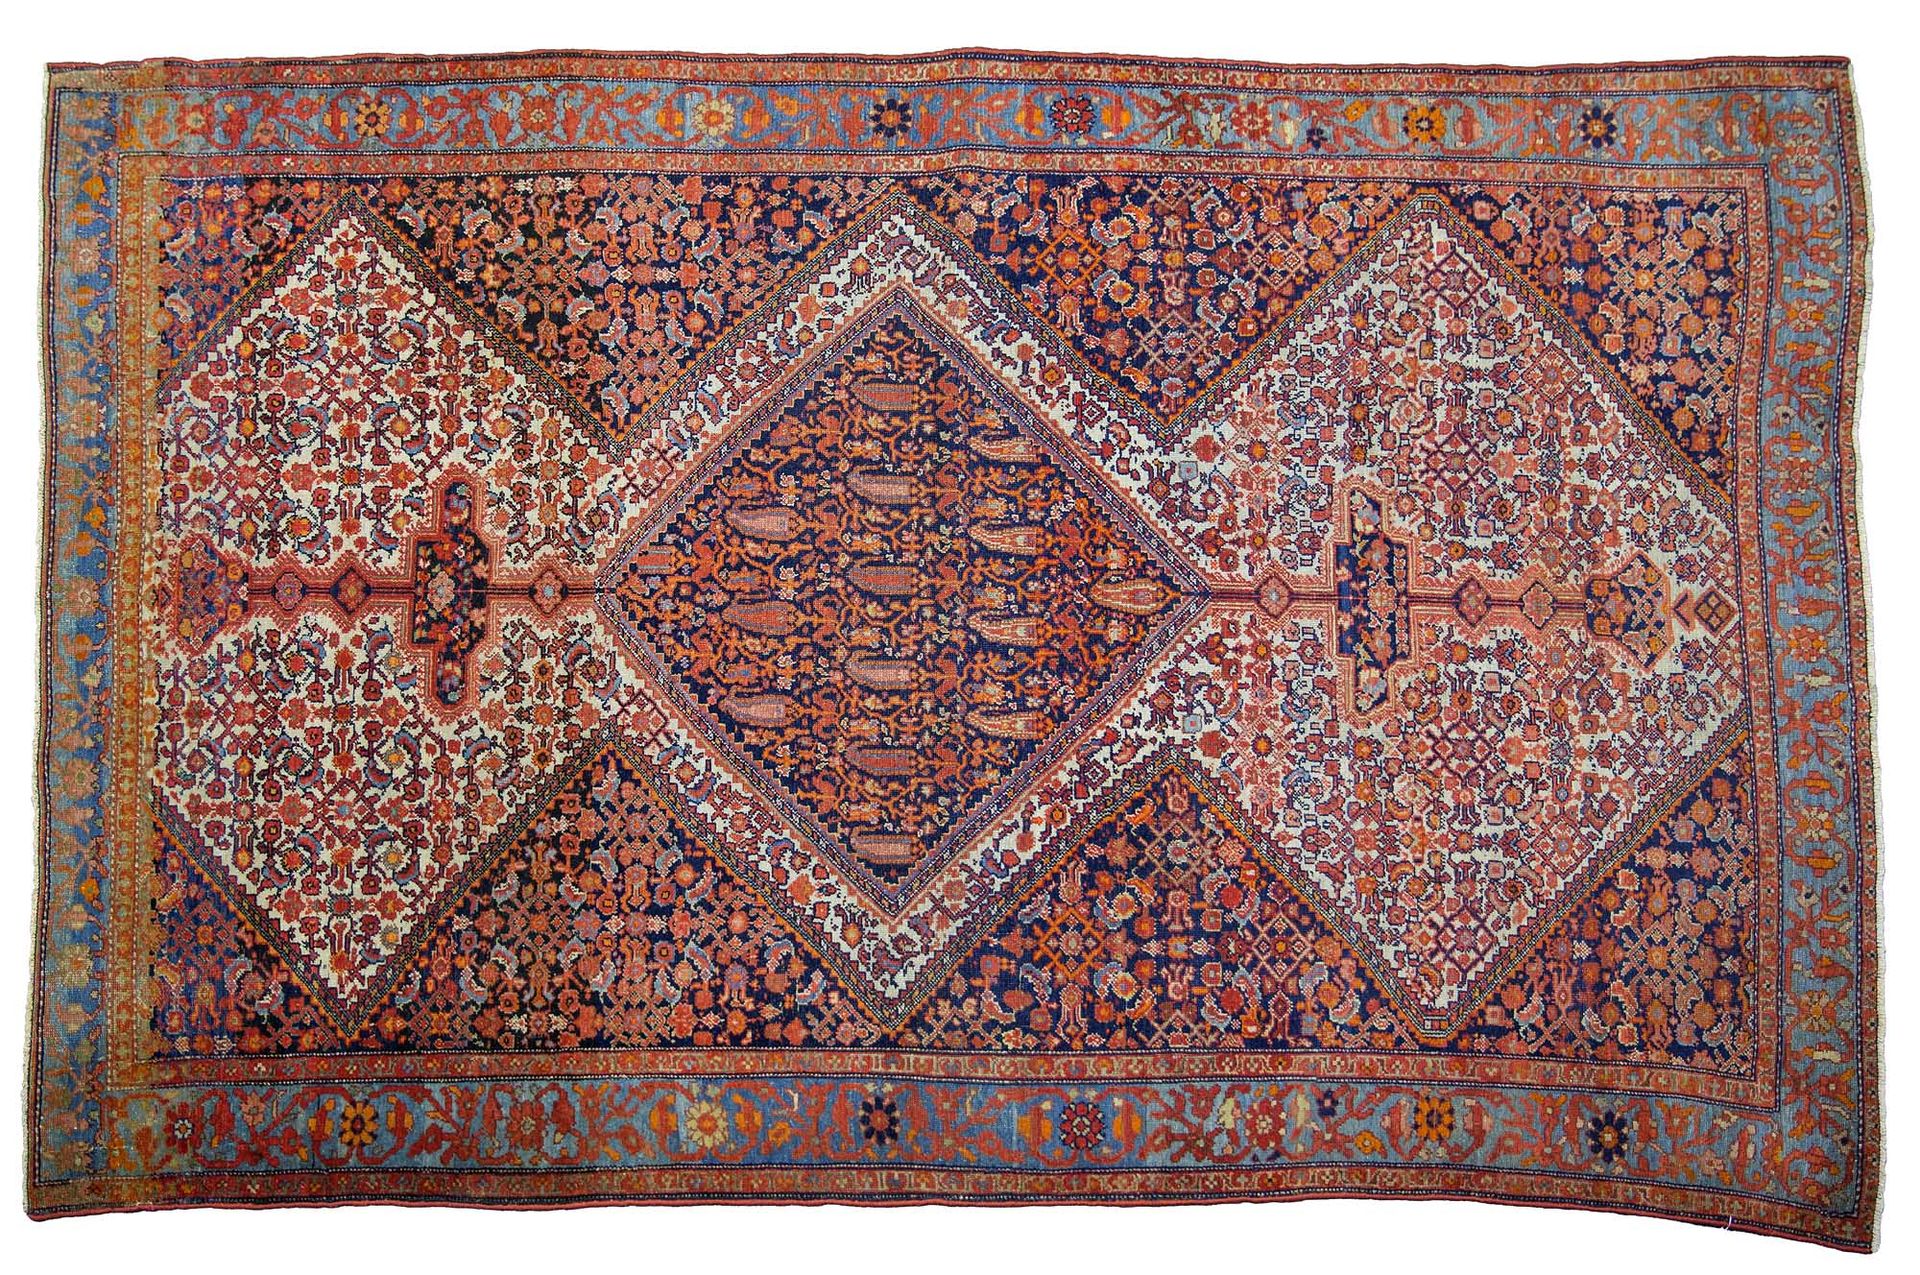 Null MELAYER carpet (Persia), late 19th century

Dimensions : 195 x 140cm

Techn&hellip;